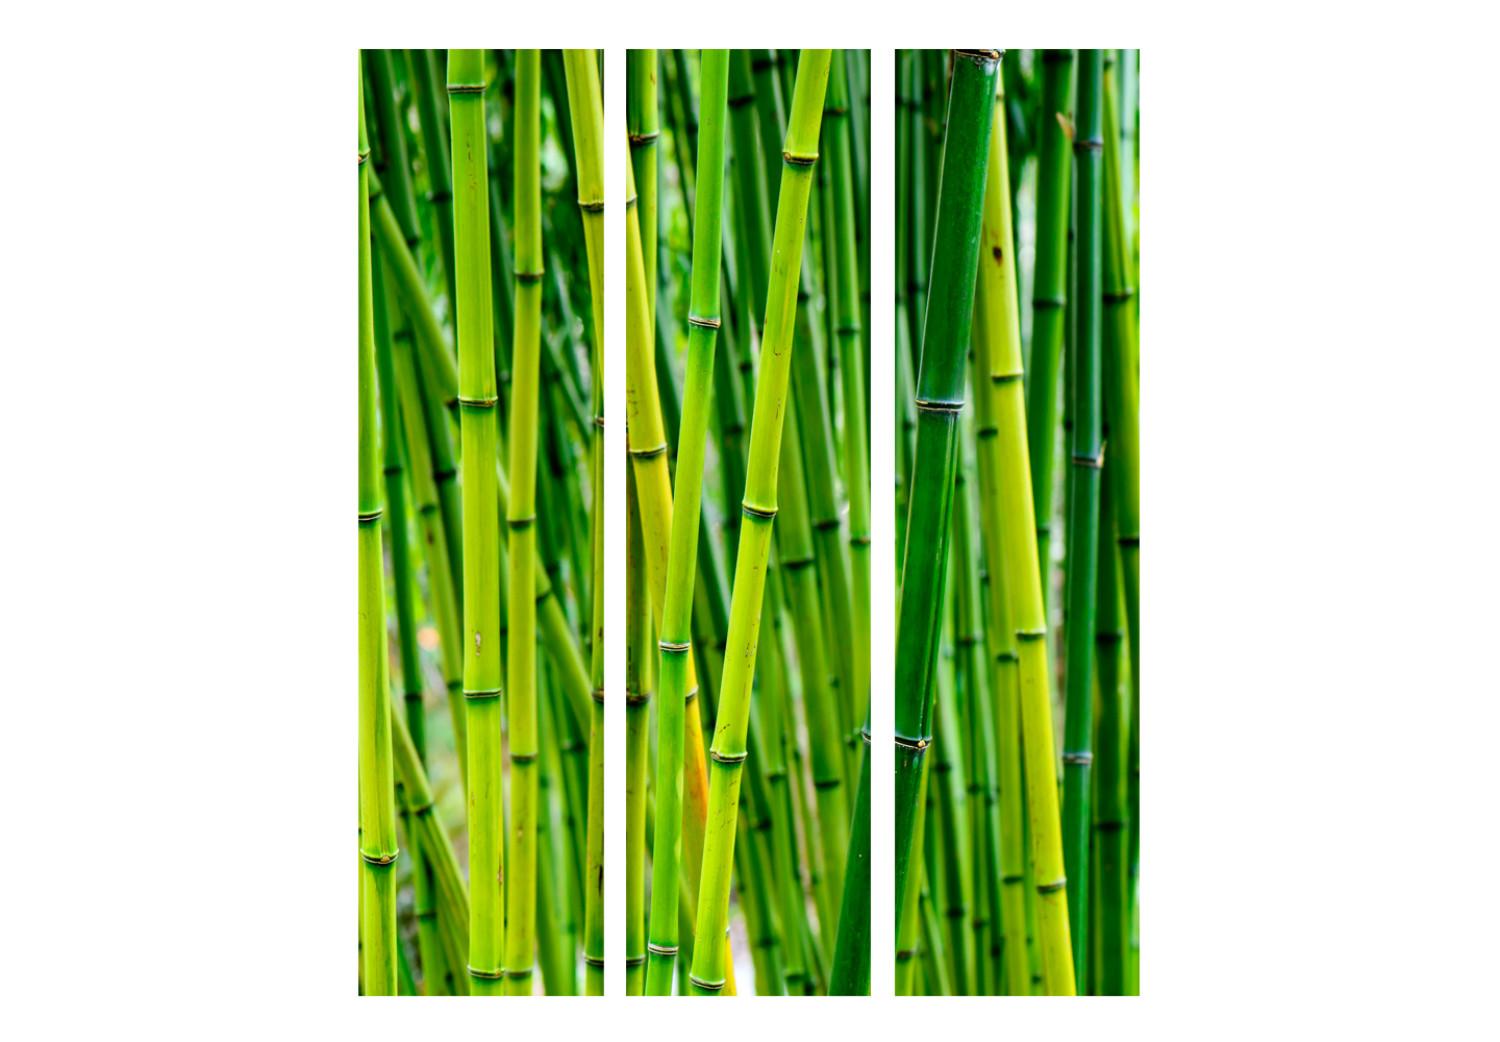 Room Divider Bamboo Forest - green bamboo trees in an oriental Zen motif